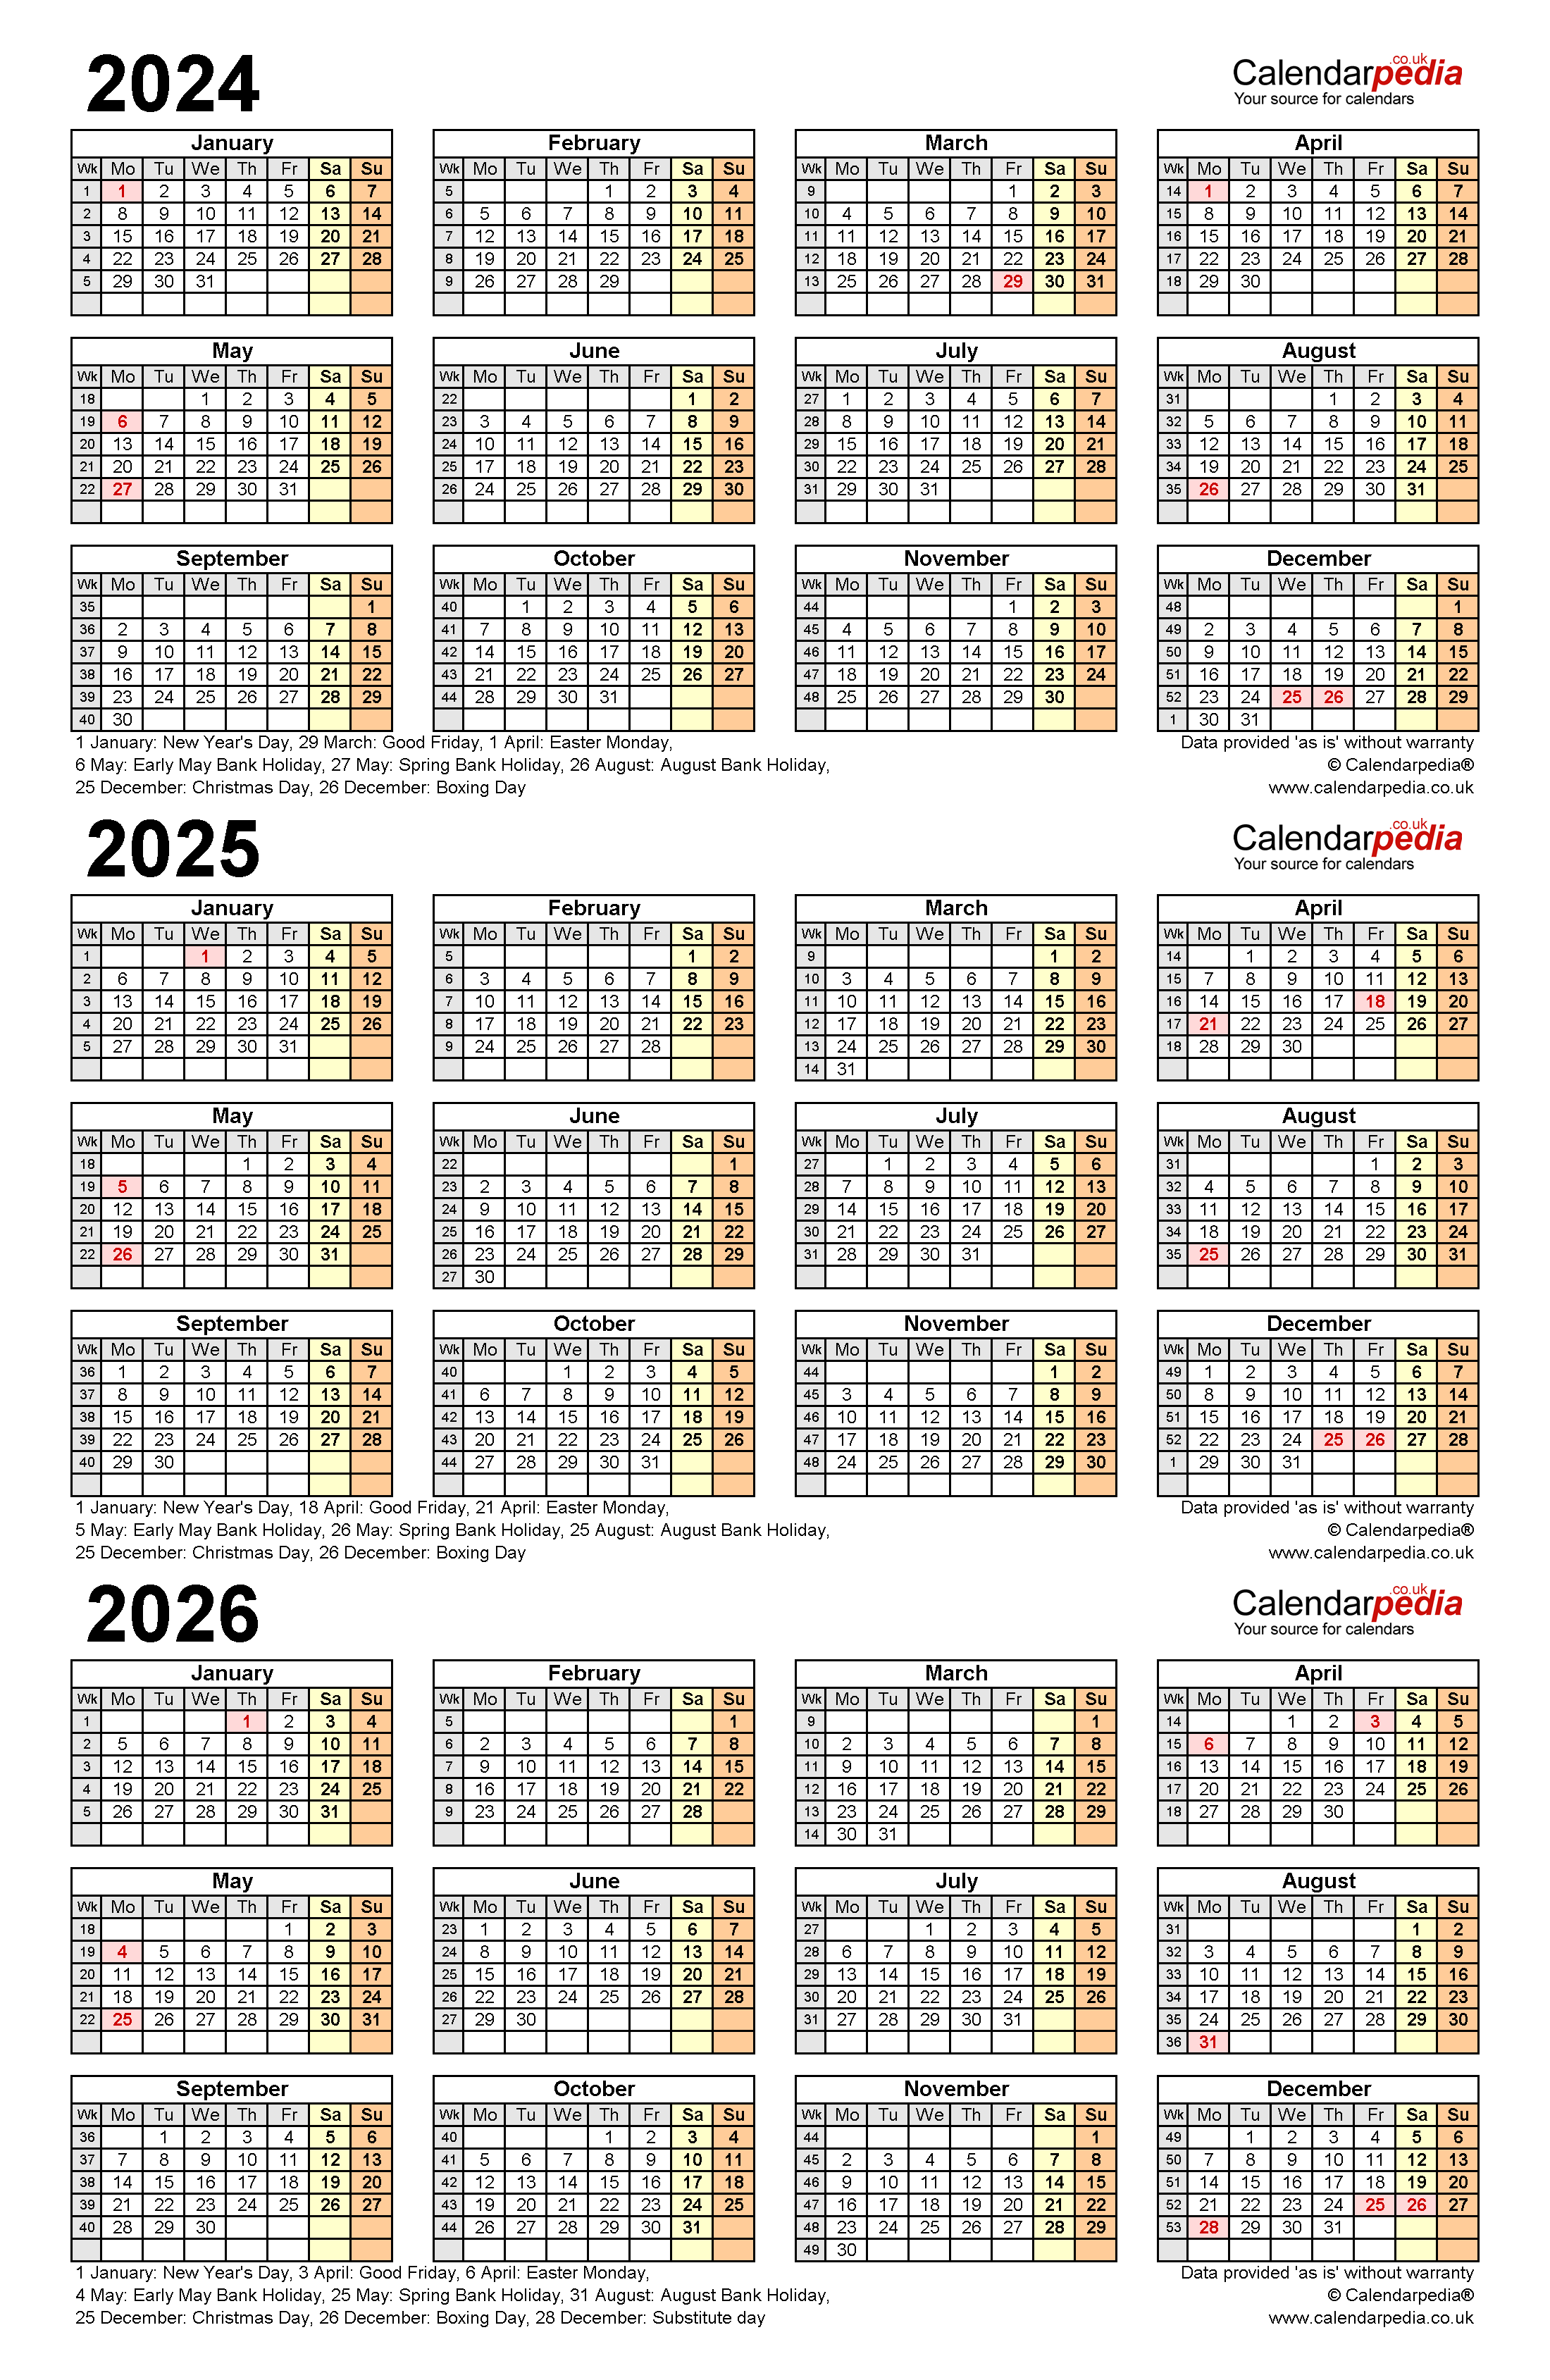 Lisd 2025 Calendar